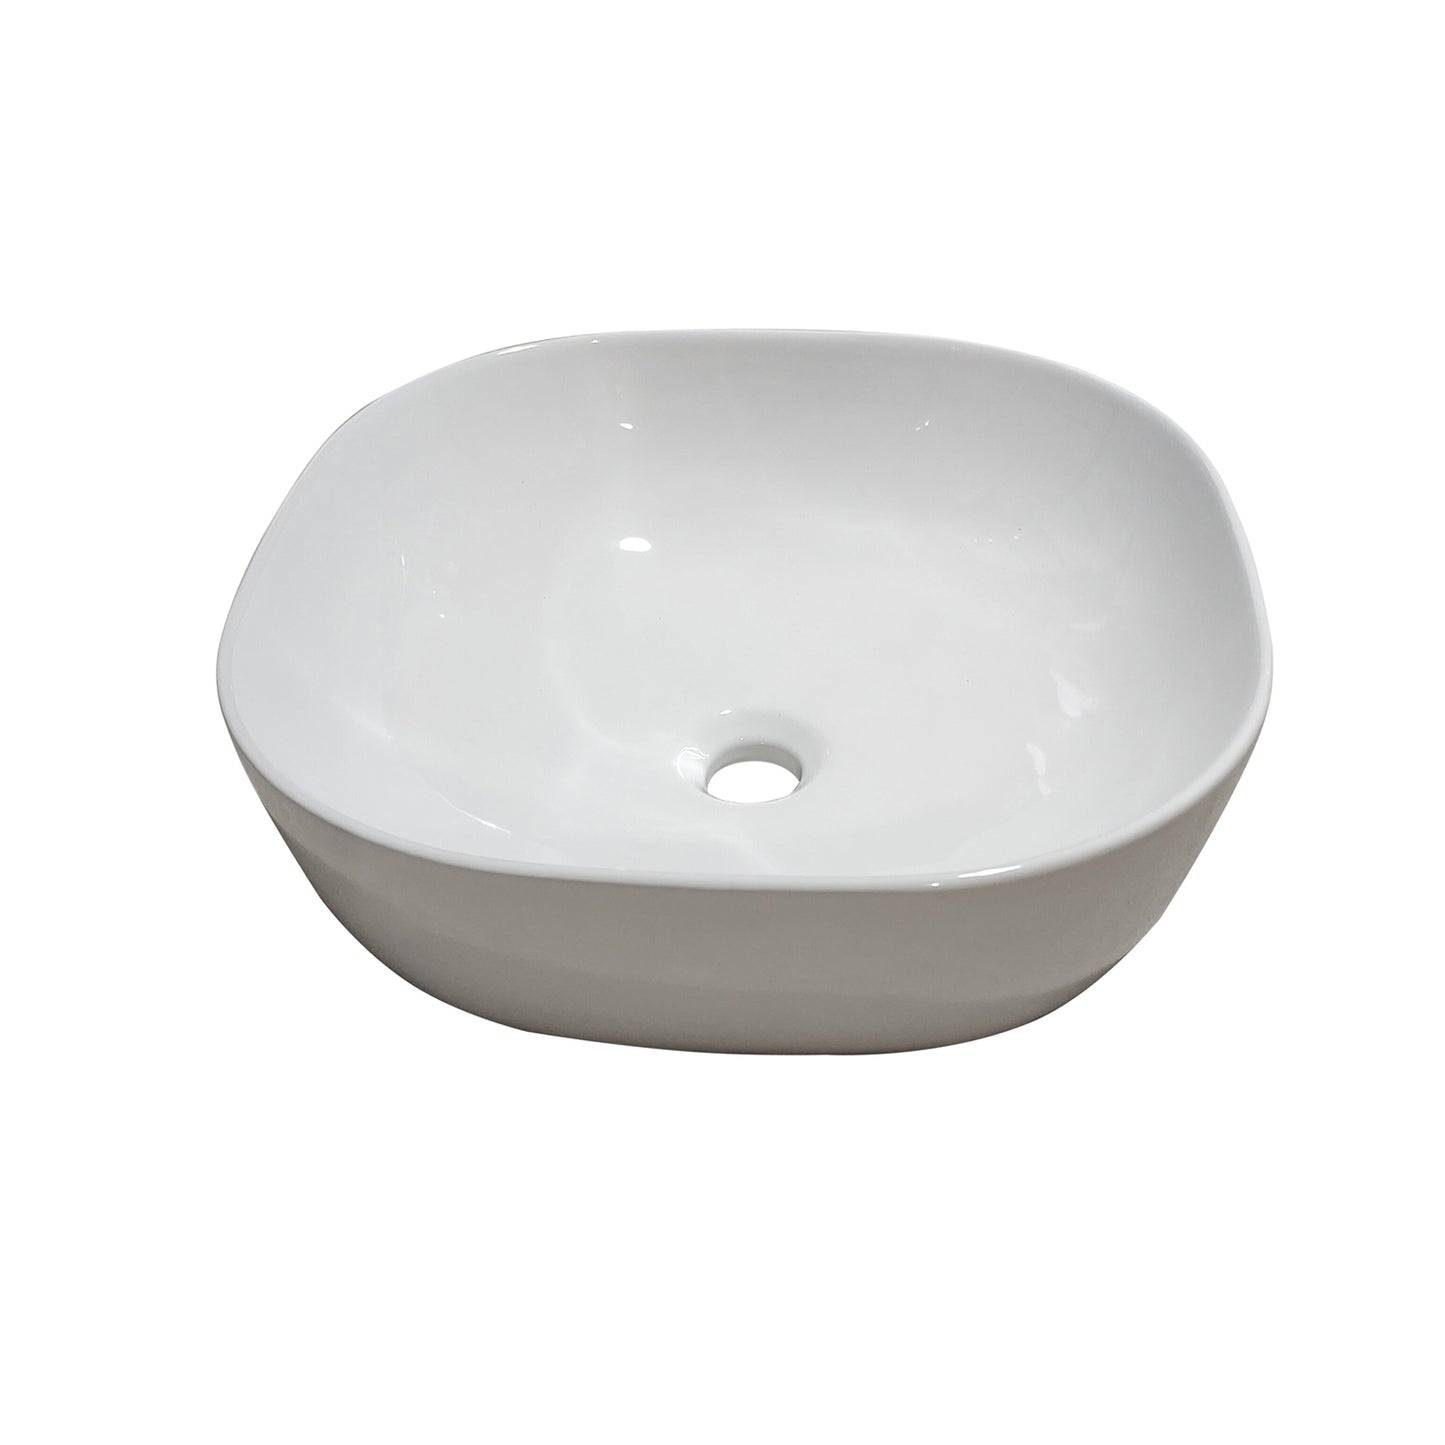 Zion 16 in. Square White Finish Ceramic Bathroom Vanity Sink